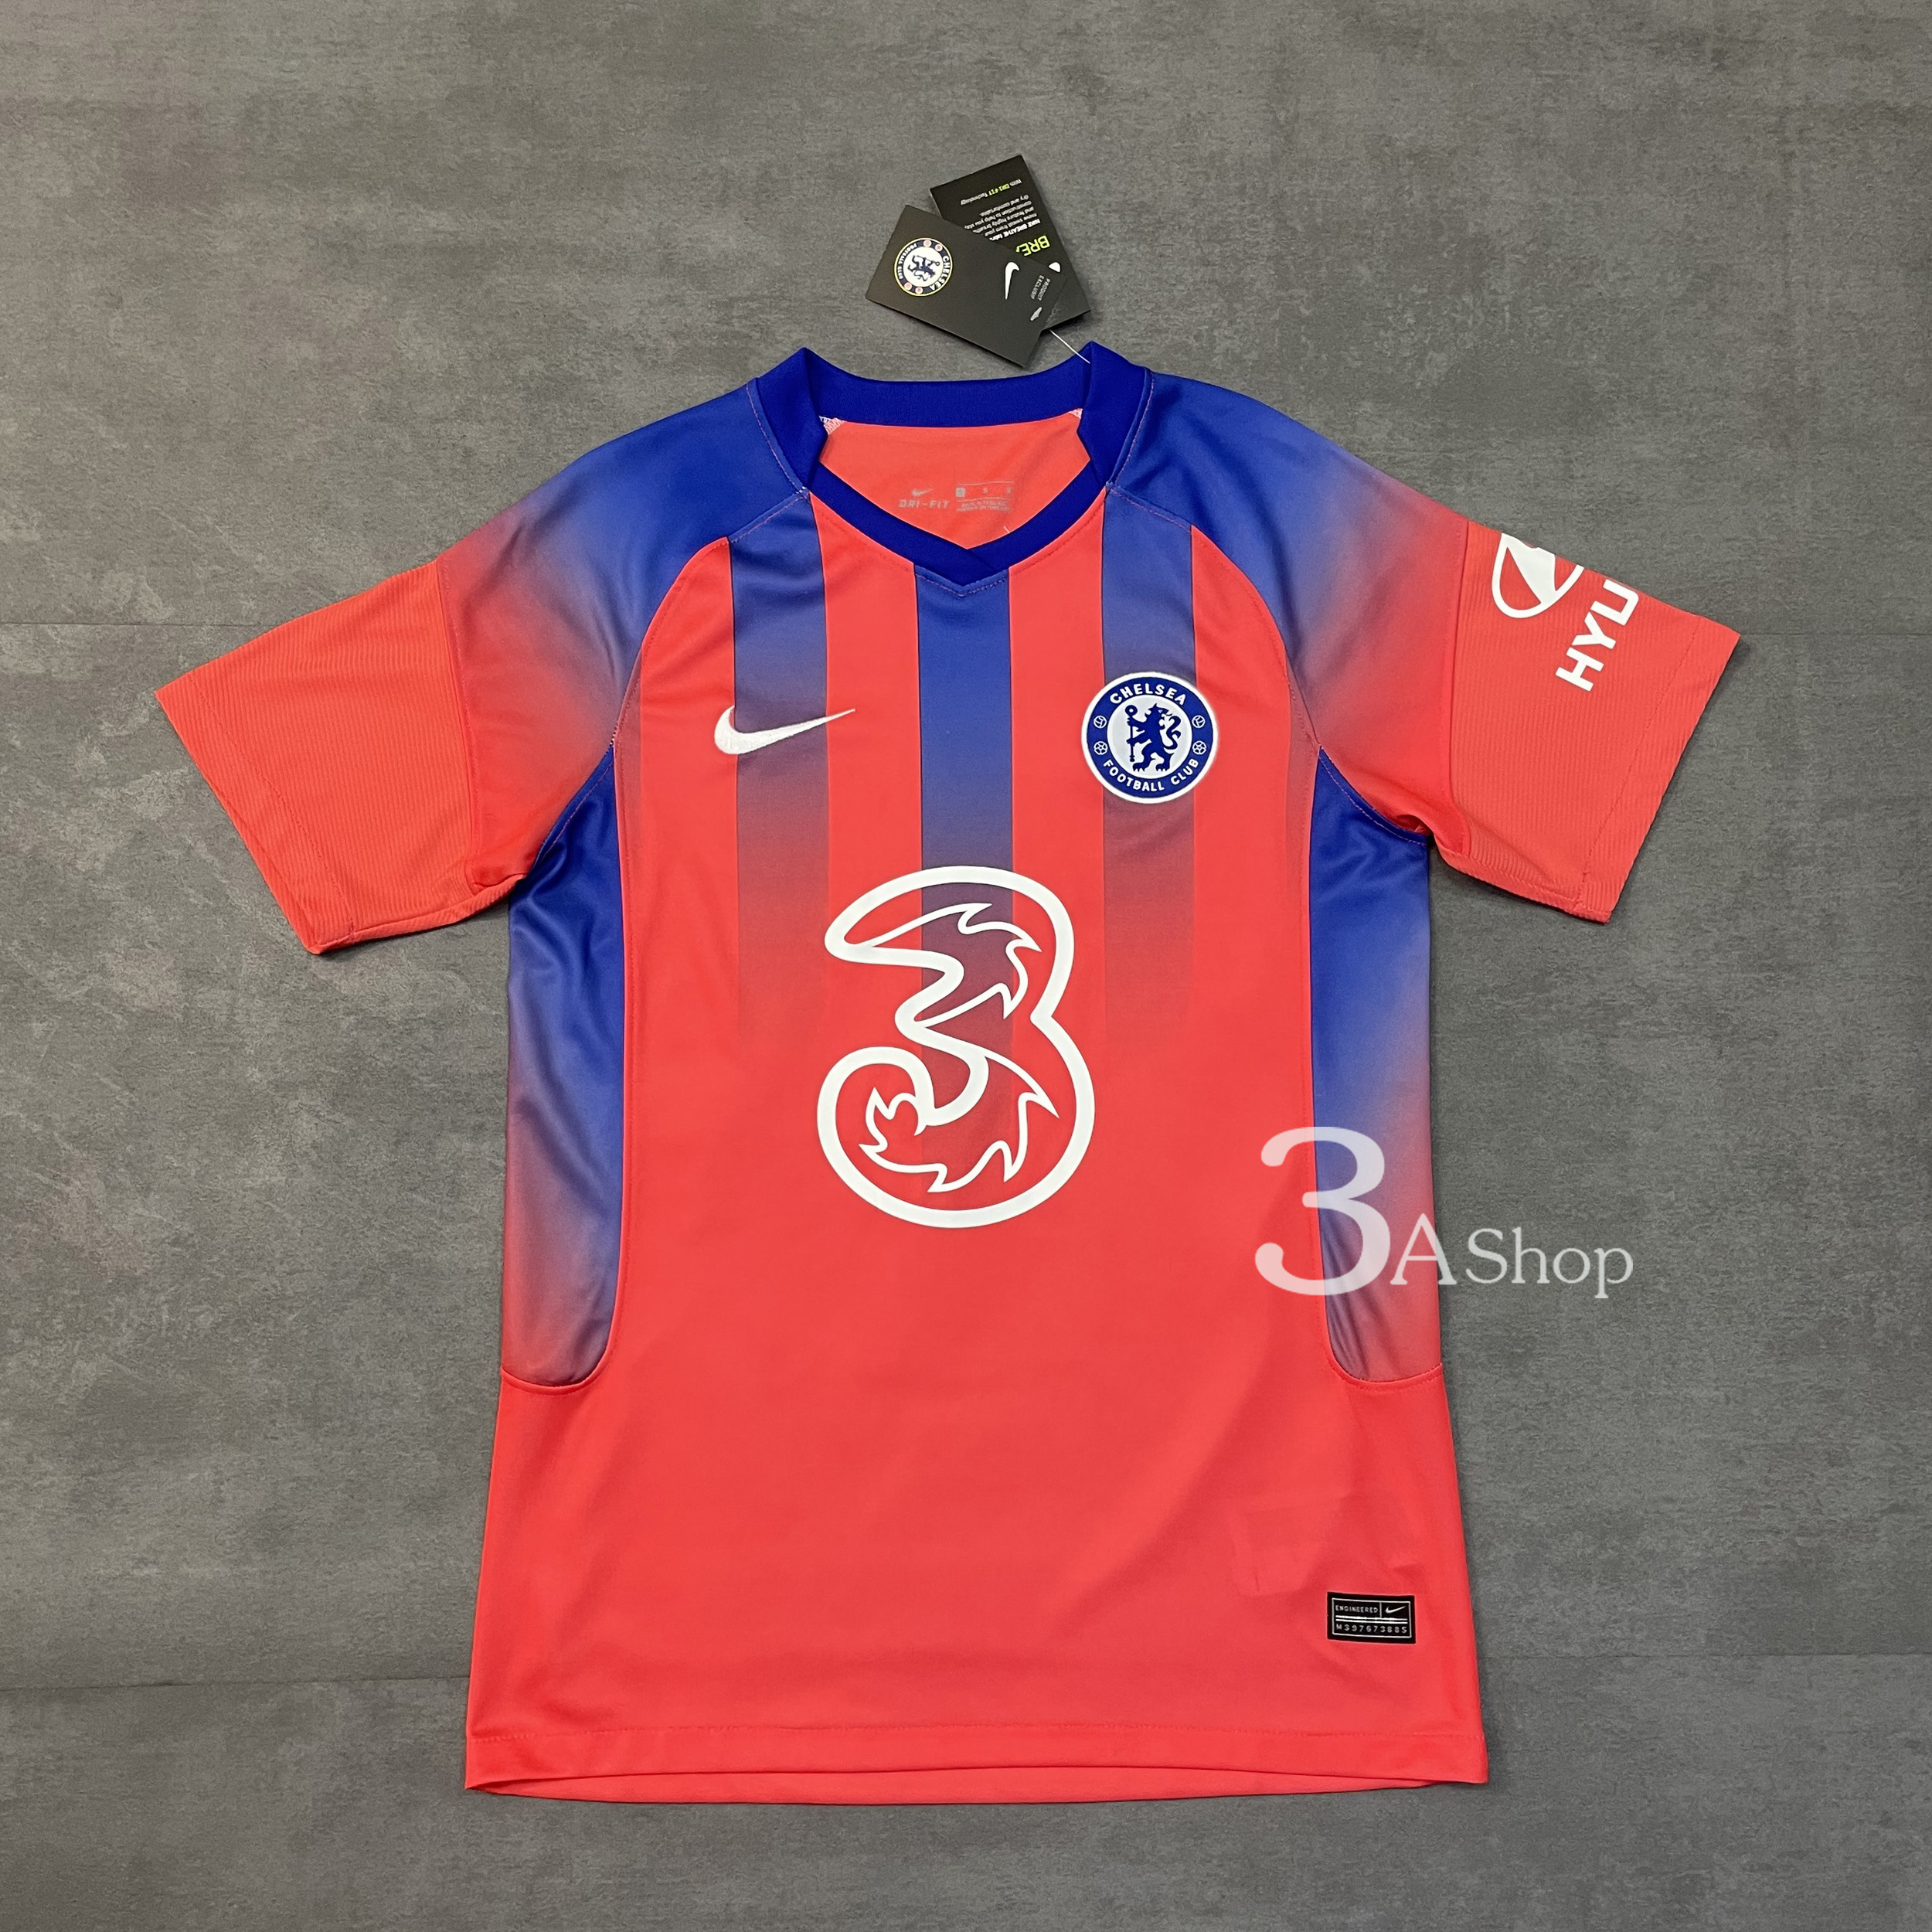 Chelsea Third 2020/2021 Orange+ Blue FOOTBALL SHIRT SOCCER JERSEY เสื้อบอล เสื้อฟุตบอล ทีมเชลซี งานคุณภาพ ผ้านุ่ม ใส่สบาย เกรด AAA